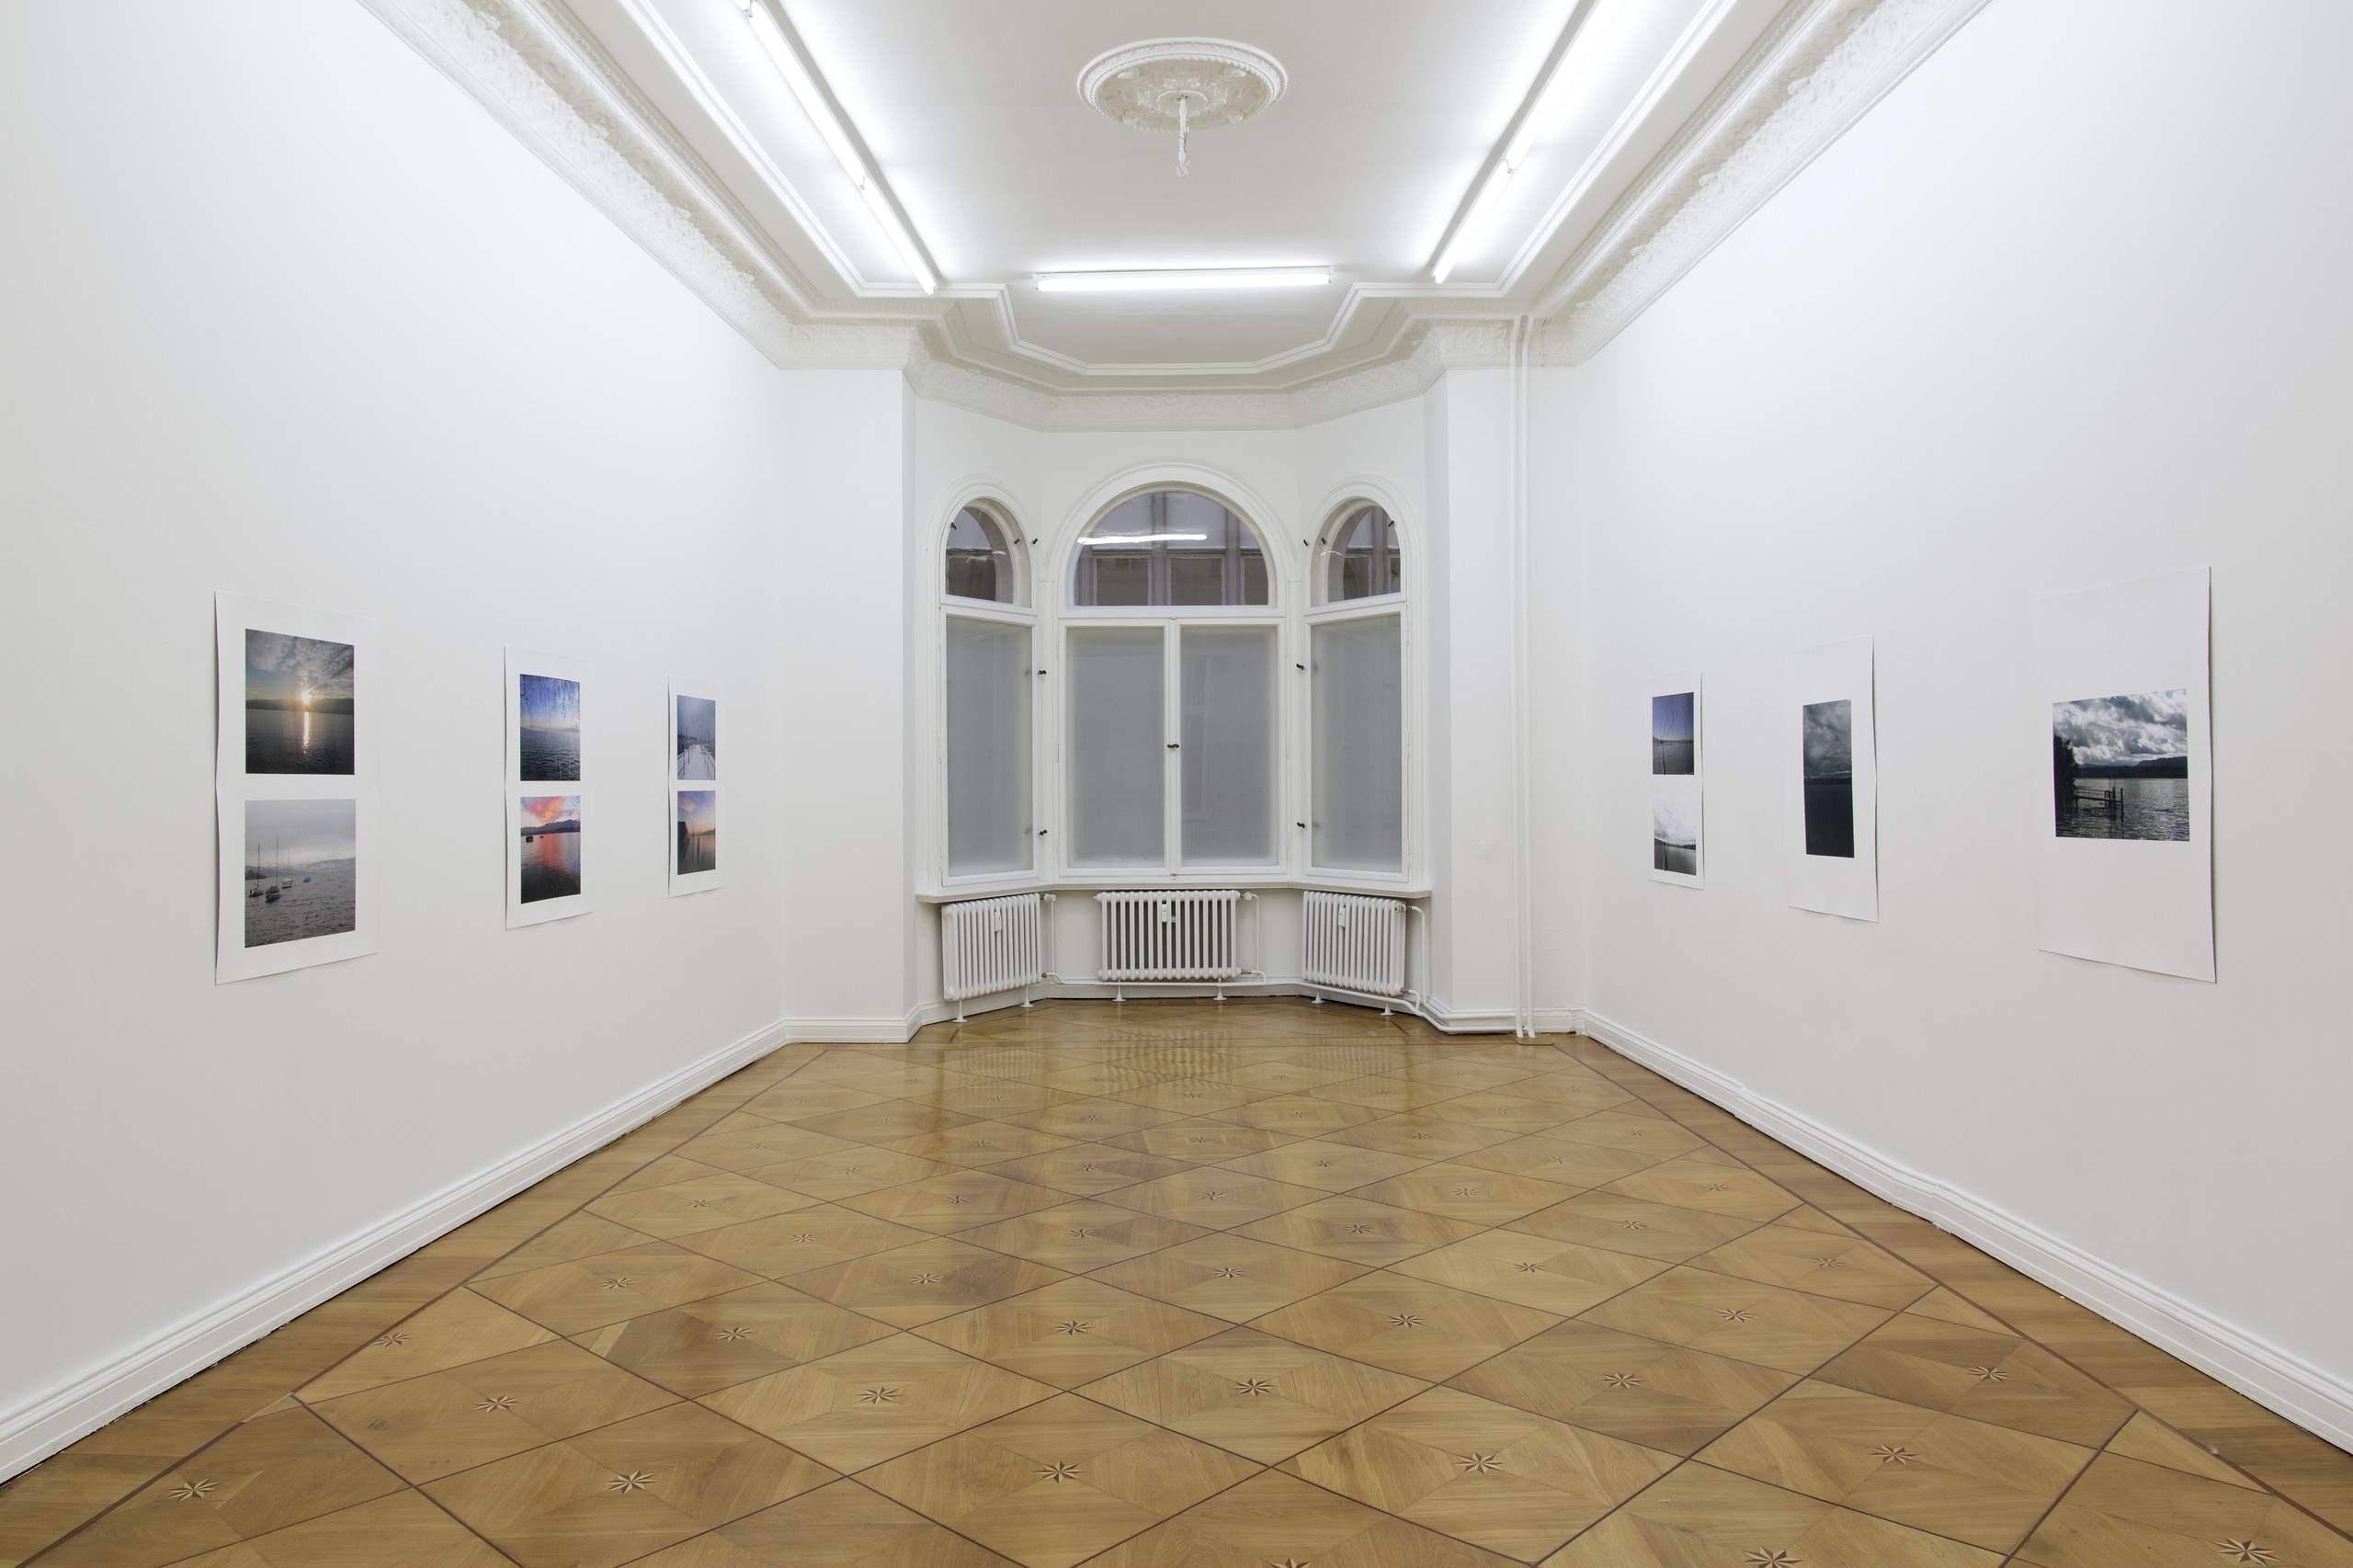 Installation view, Schätze der Erinnerung, Société, Berlin, 2015